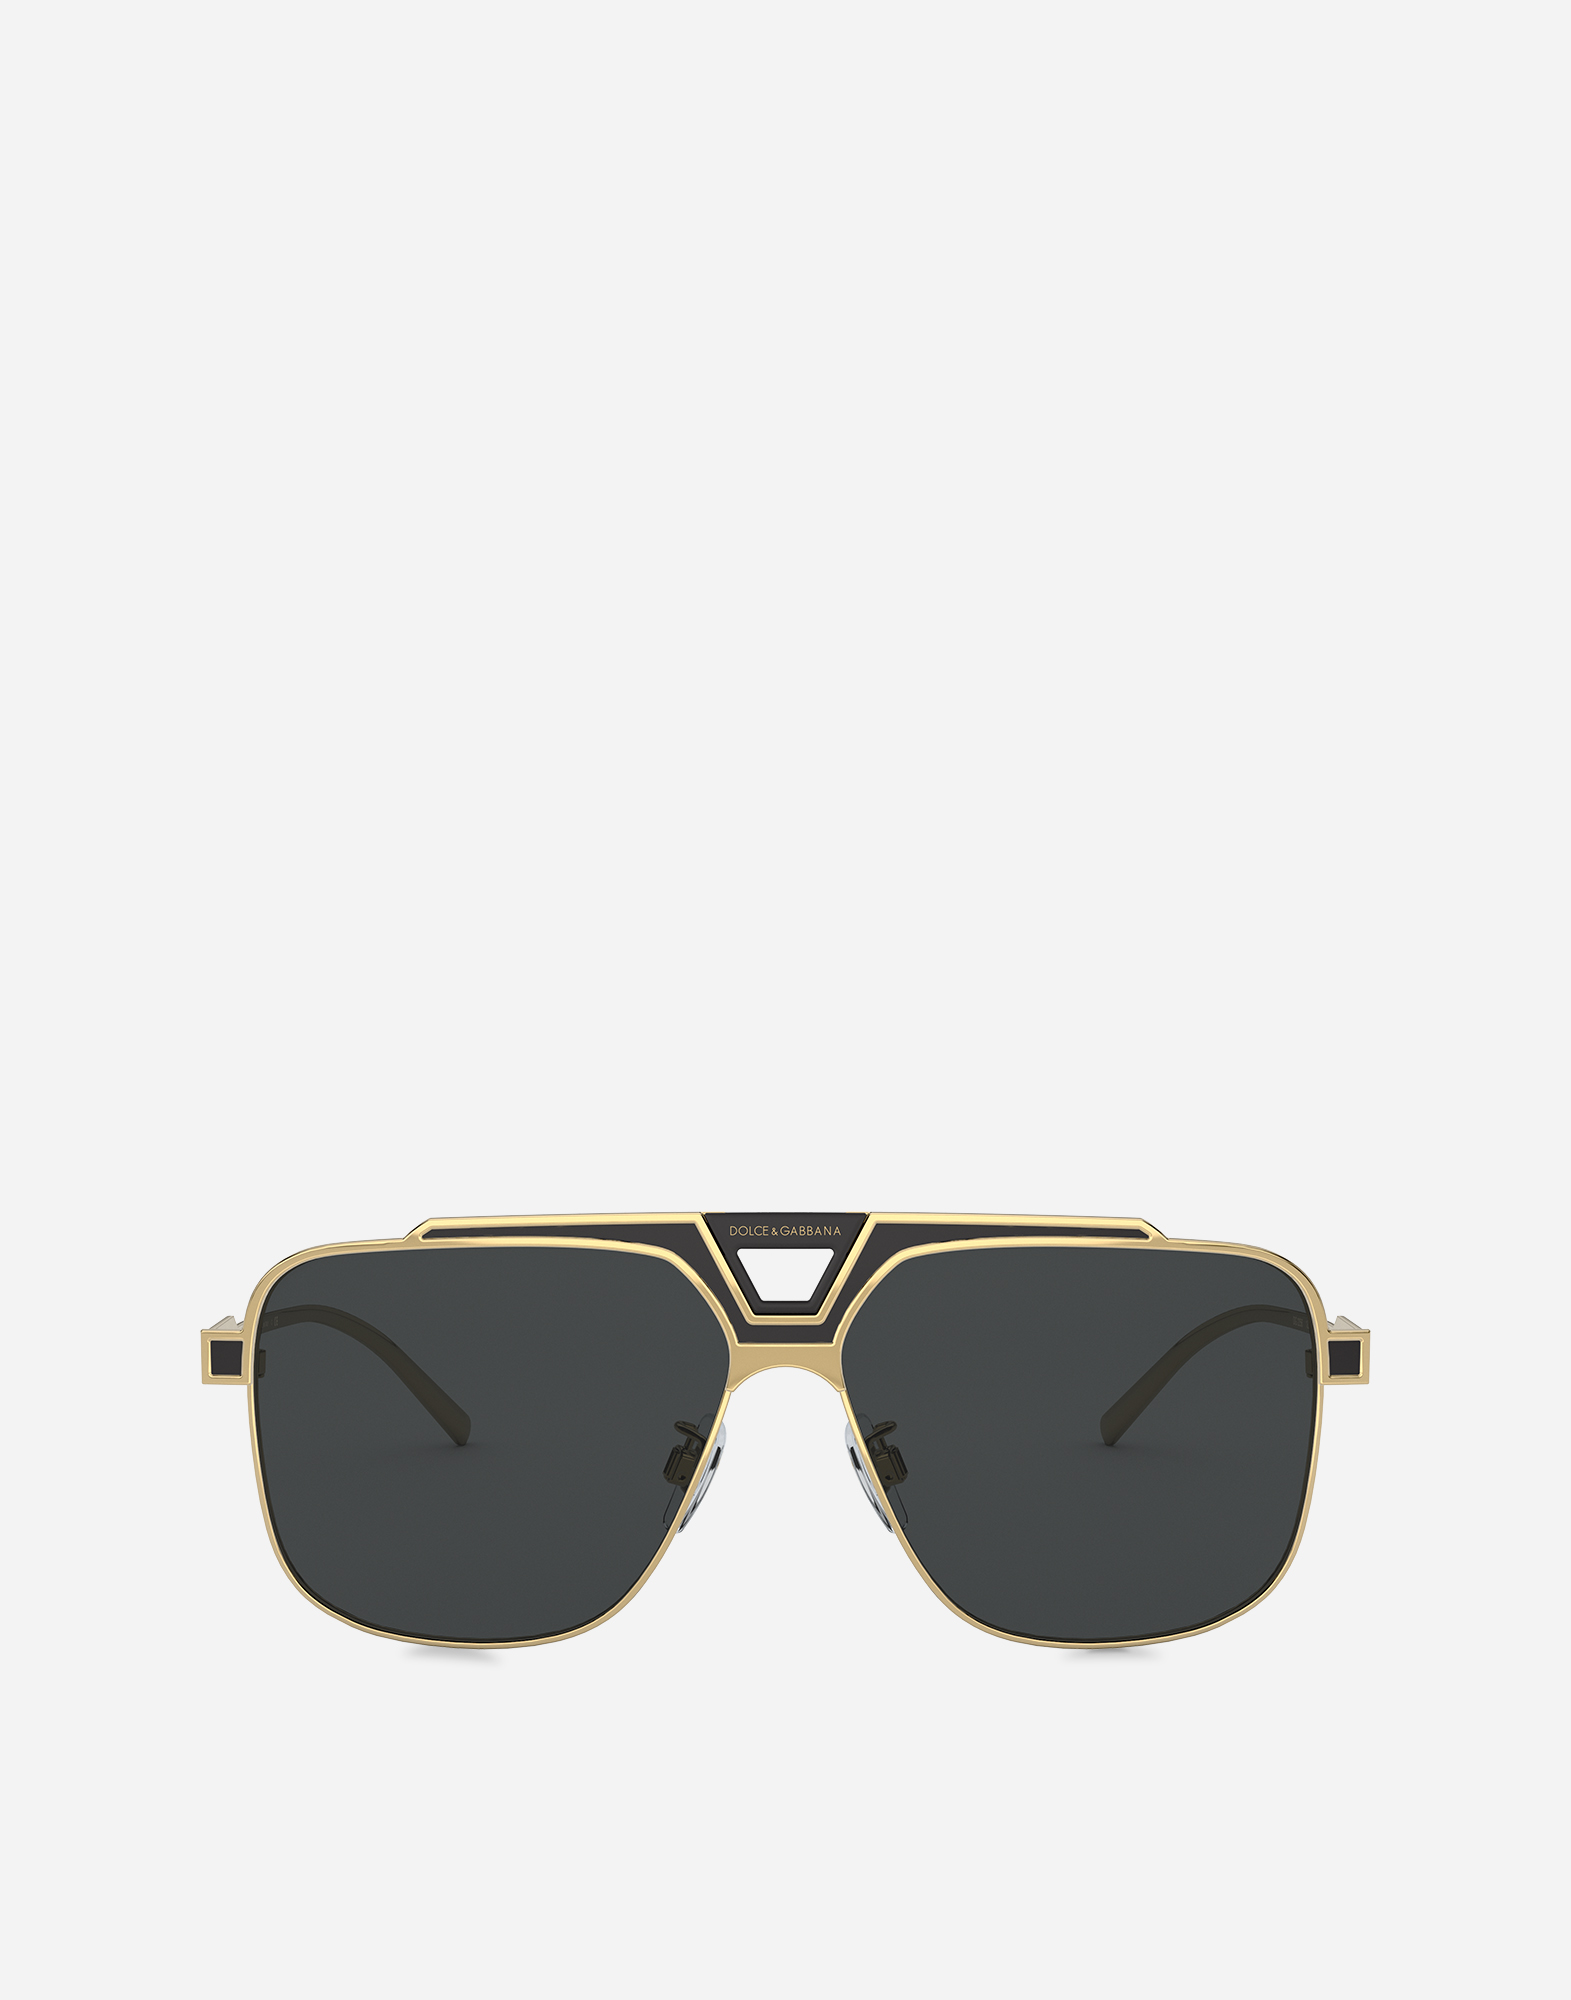 dolce and gabbana sunglasses mens